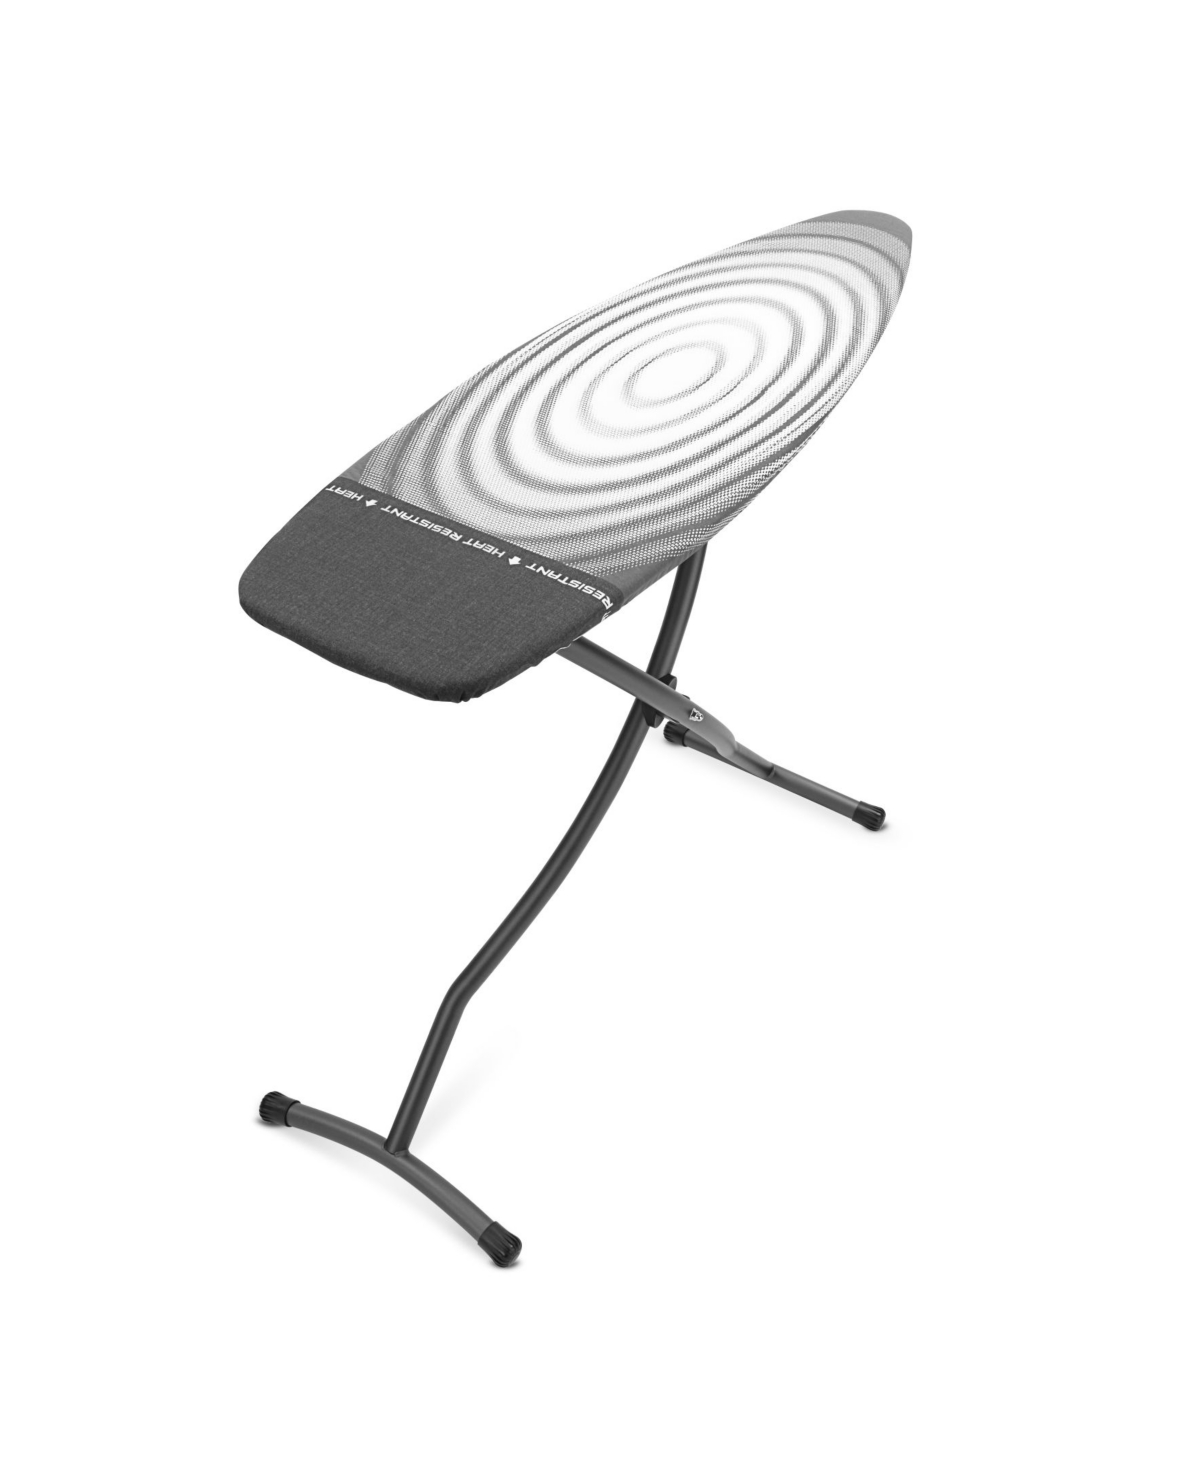 Ironing Board D, 53 x 18", Parking Zone - Titan Oval'